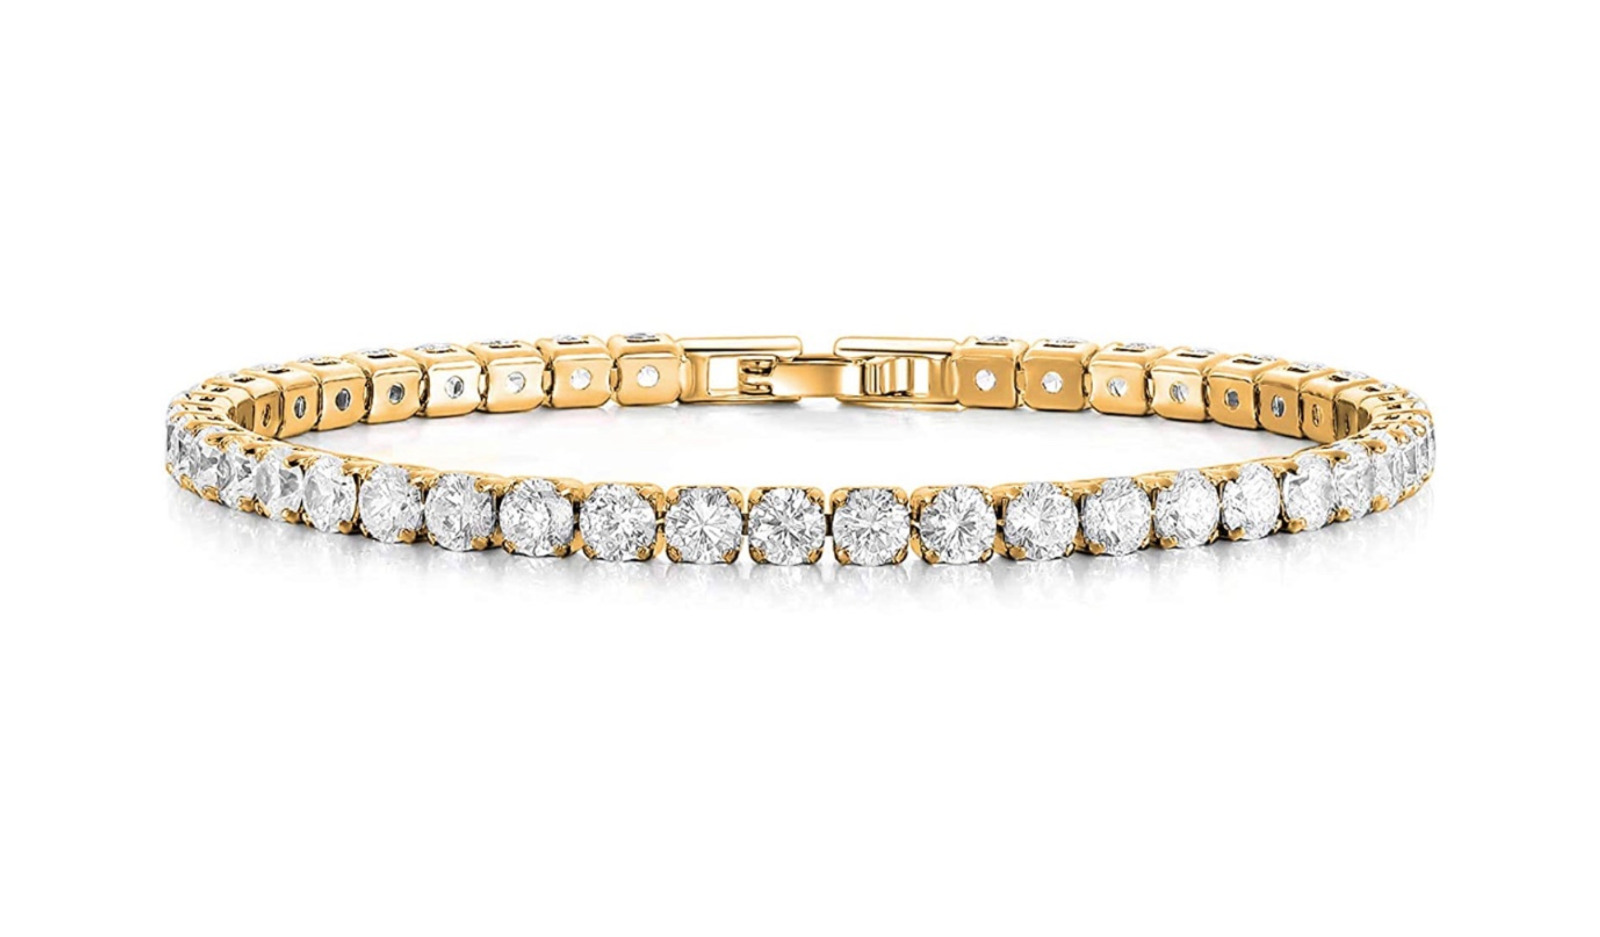 Women's 18k White Gold Plated Tennis Bracelet Made With Swarovski Elements